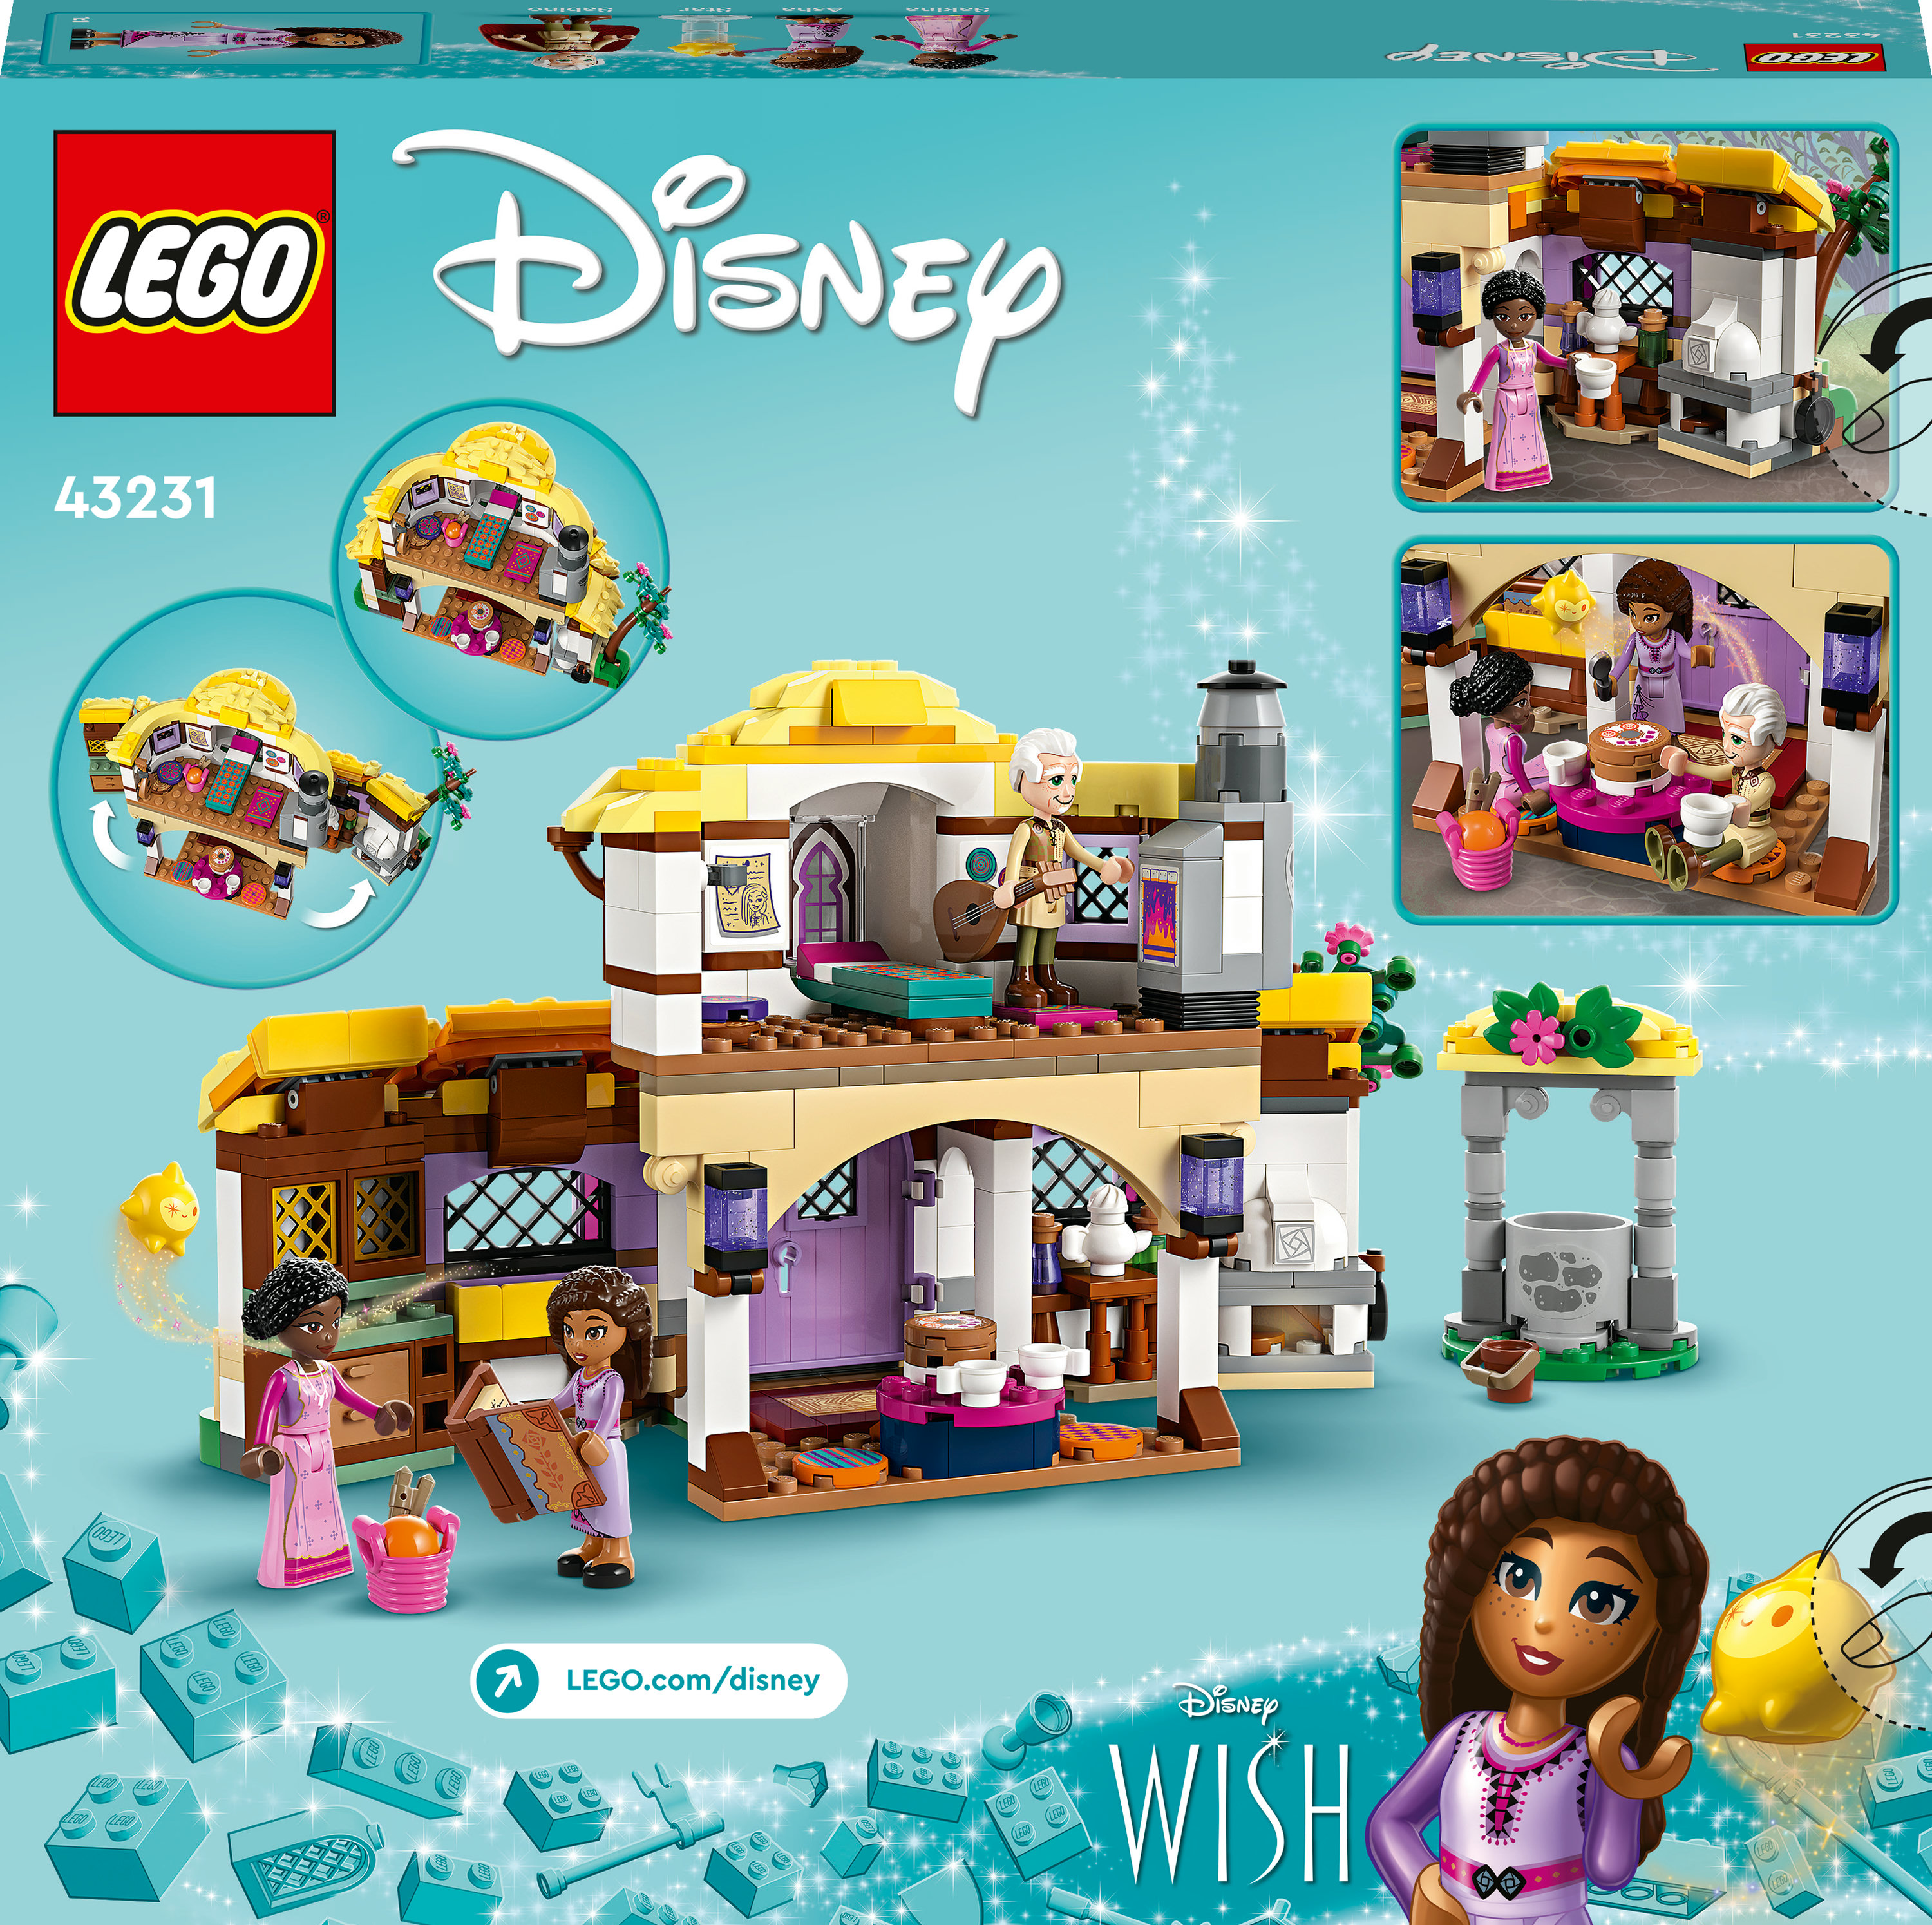 Конструктор LEGO Disney Princess Будиночок Аші 509 деталей (43231) - фото 9